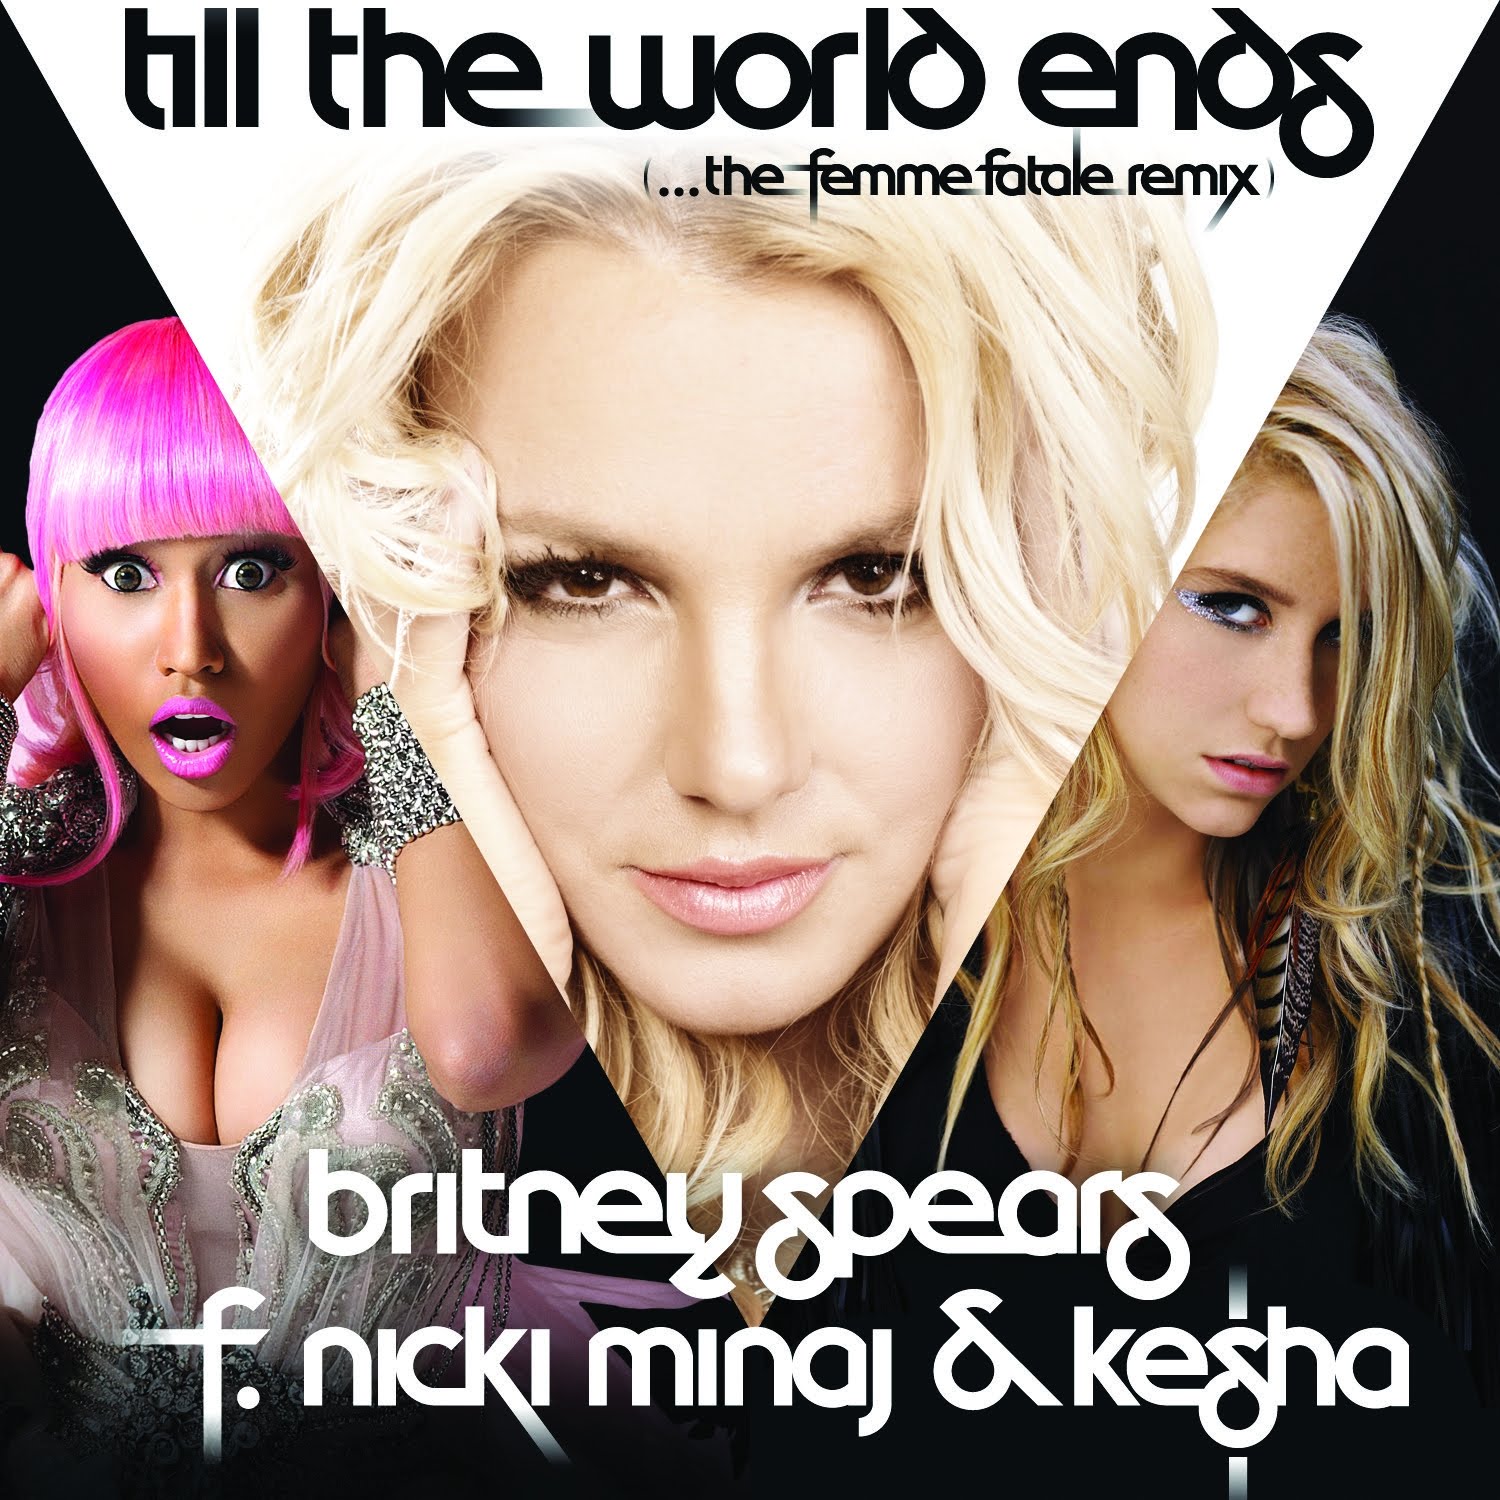 http://2.bp.blogspot.com/-9EZFdme_jZc/TbiGSN8XFrI/AAAAAAAAAc4/ufytjBK8ux4/s1600/Britney-Spears-Till-The-World-Ends-The-Femme-Fatale-Remix-feat.-Nicki-Minaj-Keha-Official-Single-Cover.jpg